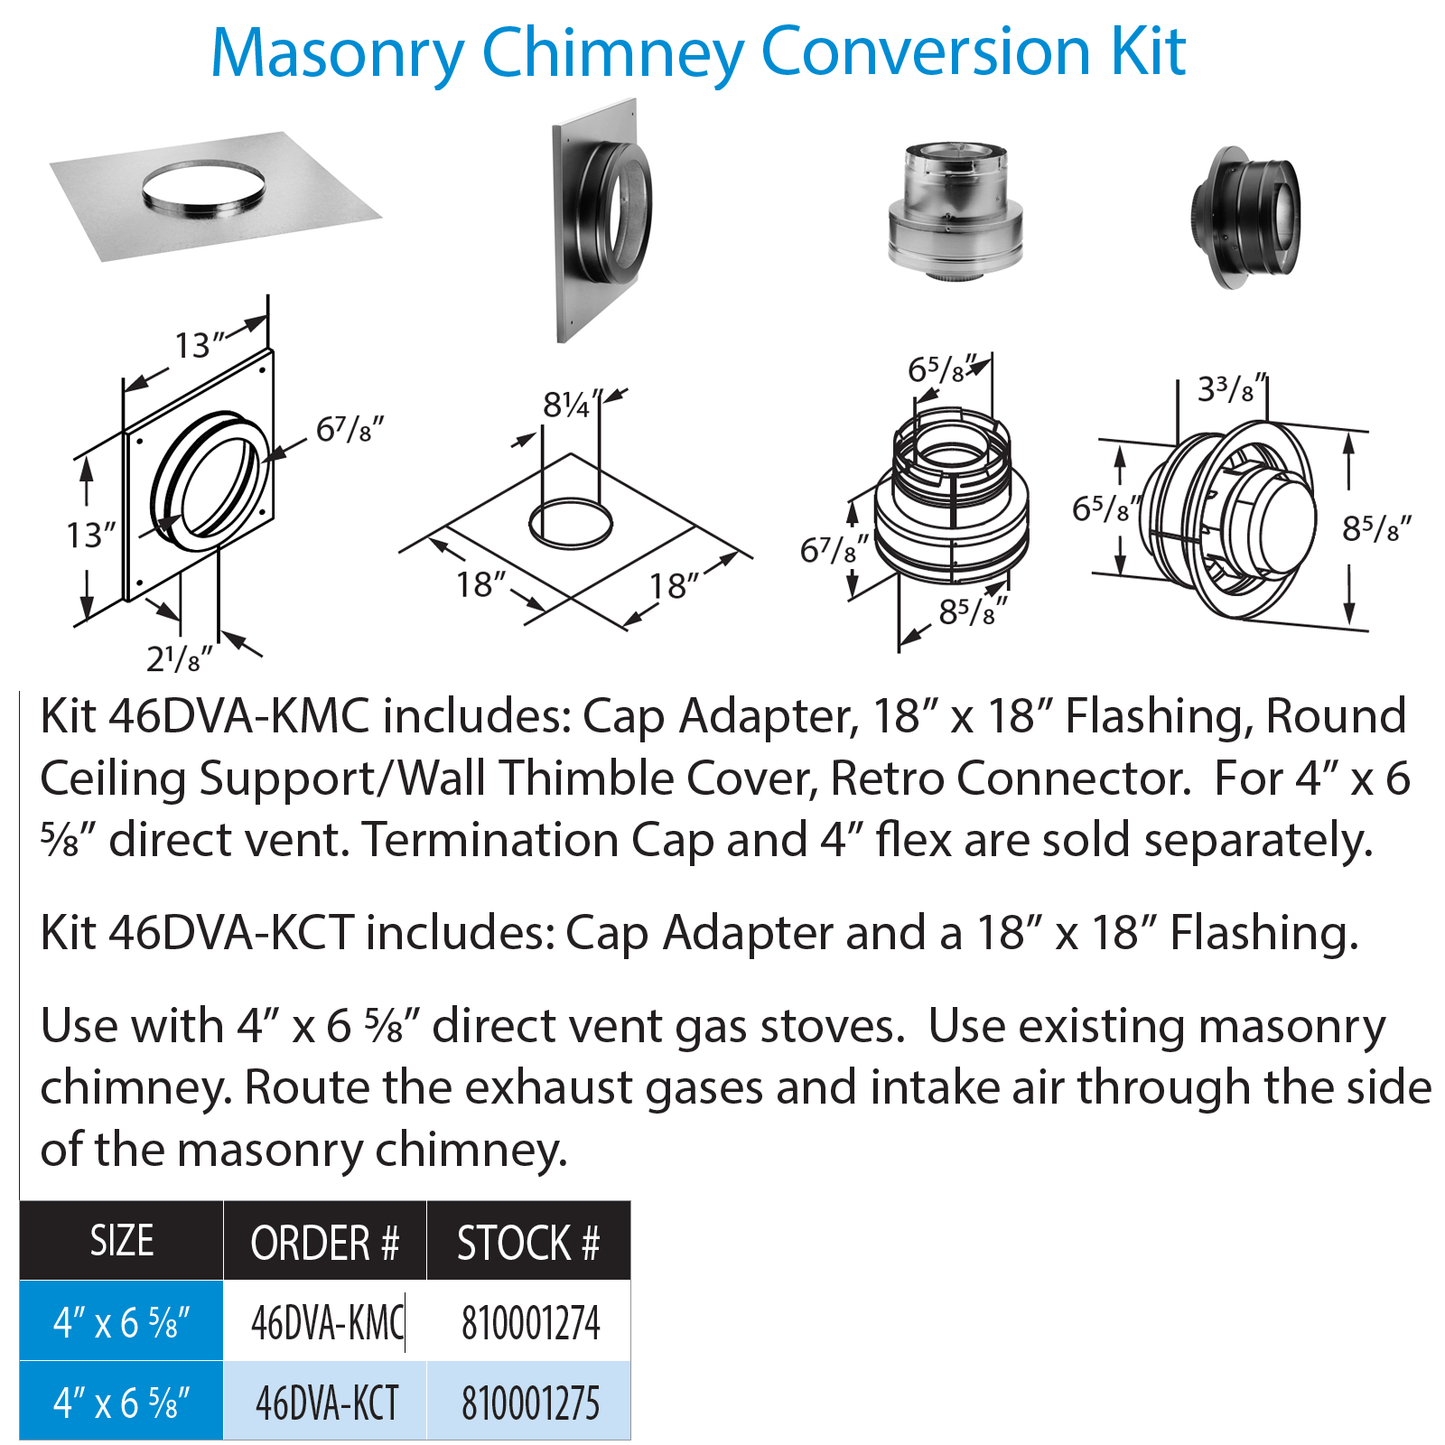 DuraVent Direct Vent Pro Masonry Chimney Conversion Kit - Rockford Chimney